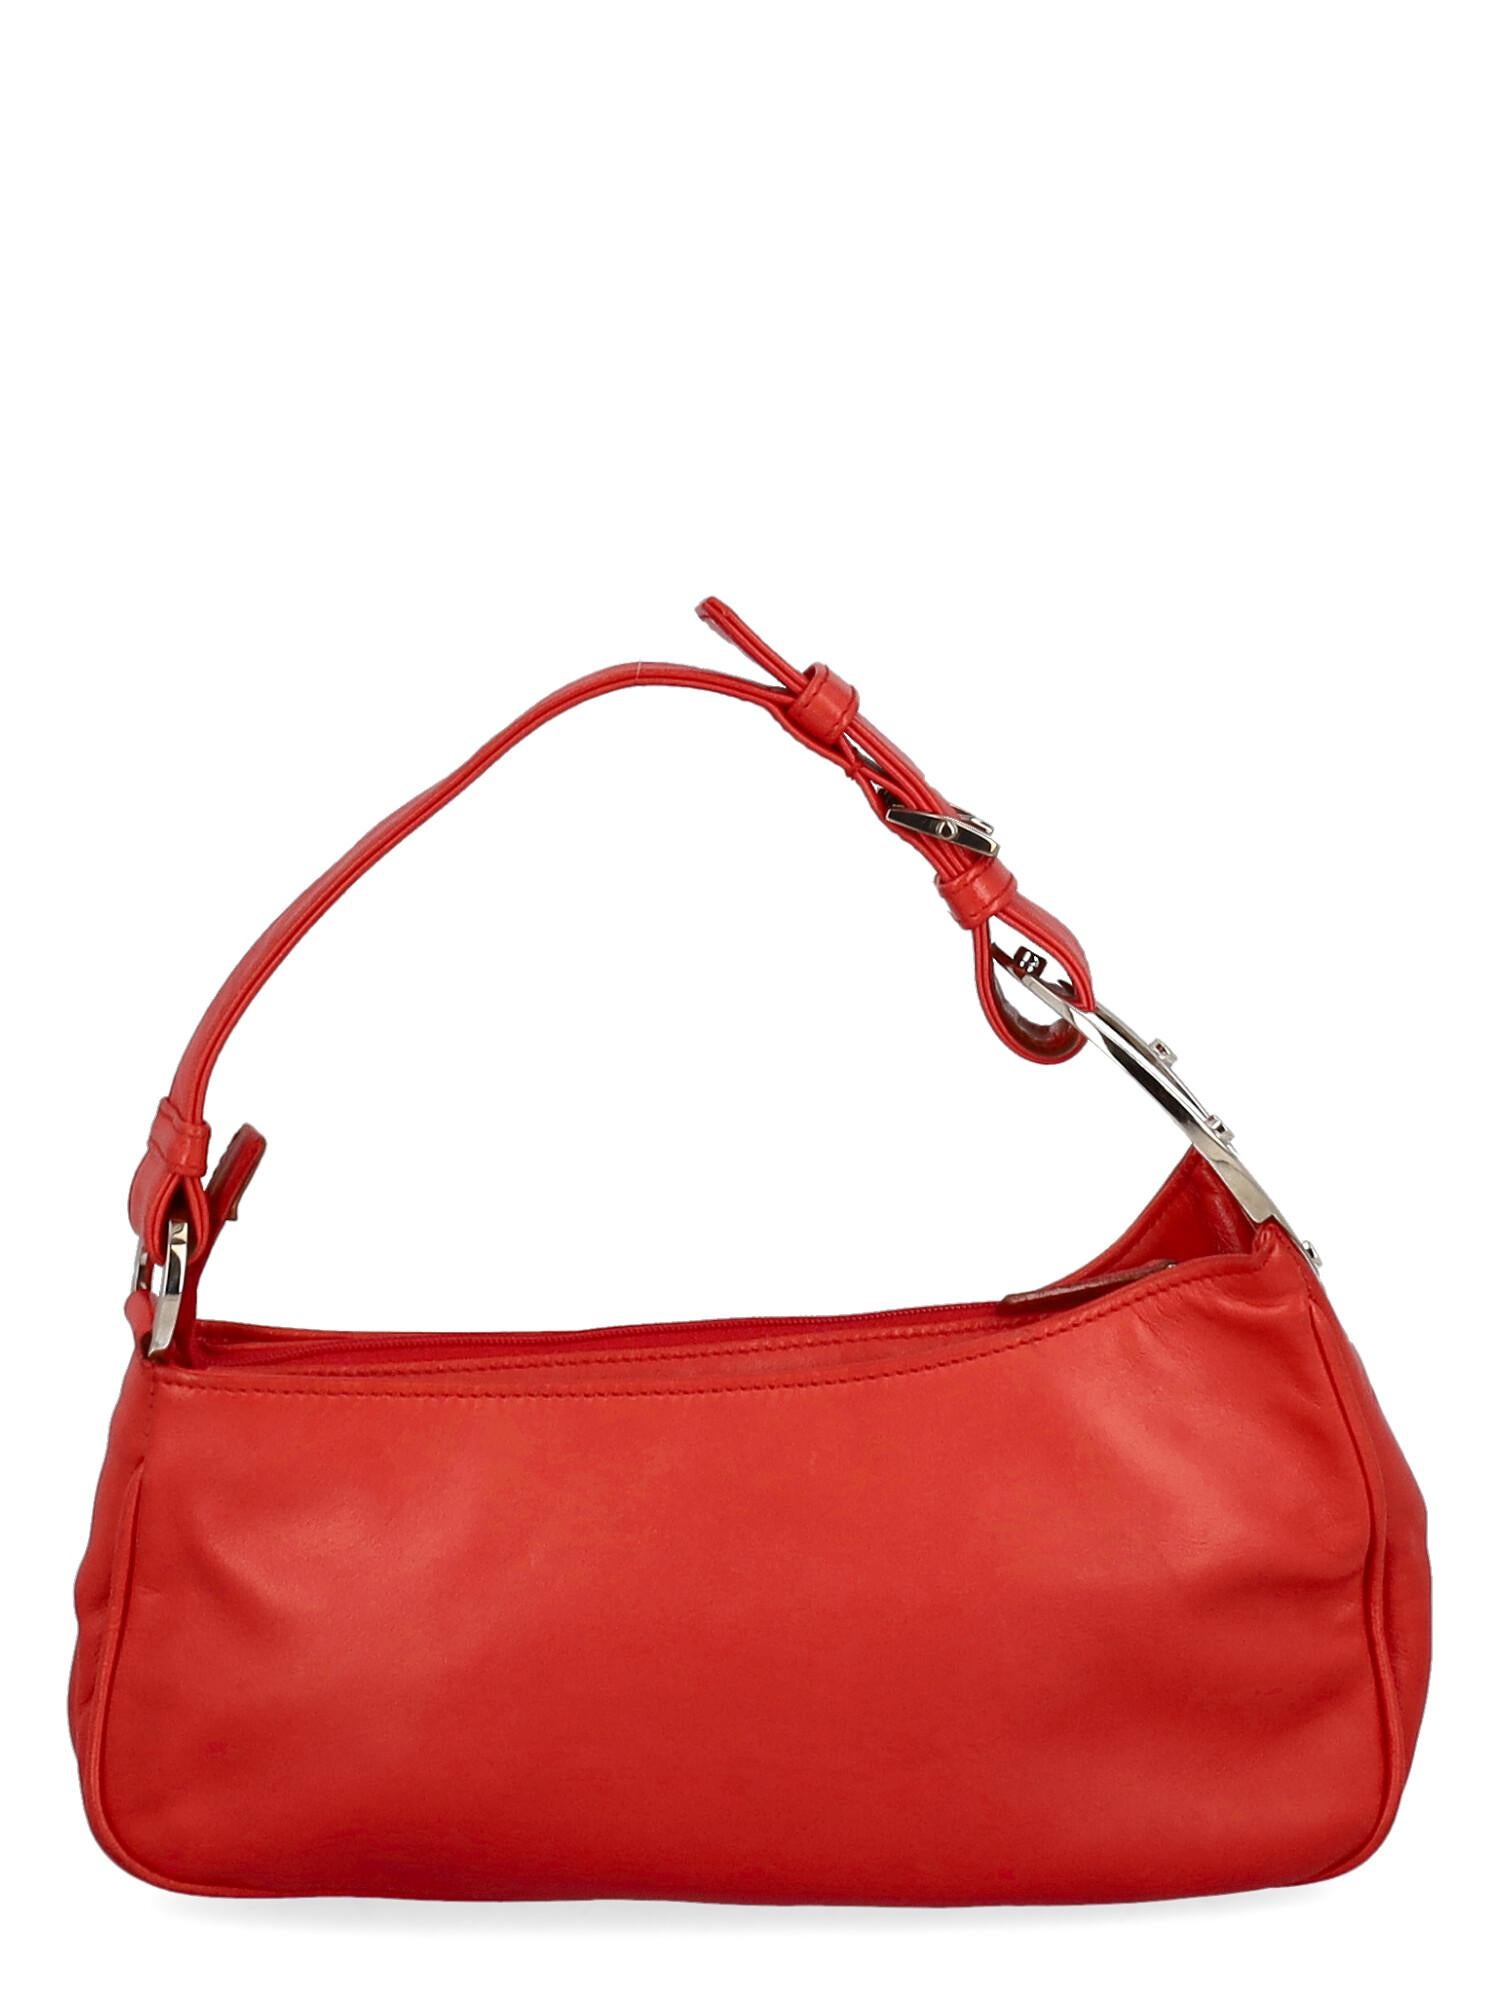 sergio rossi handbags